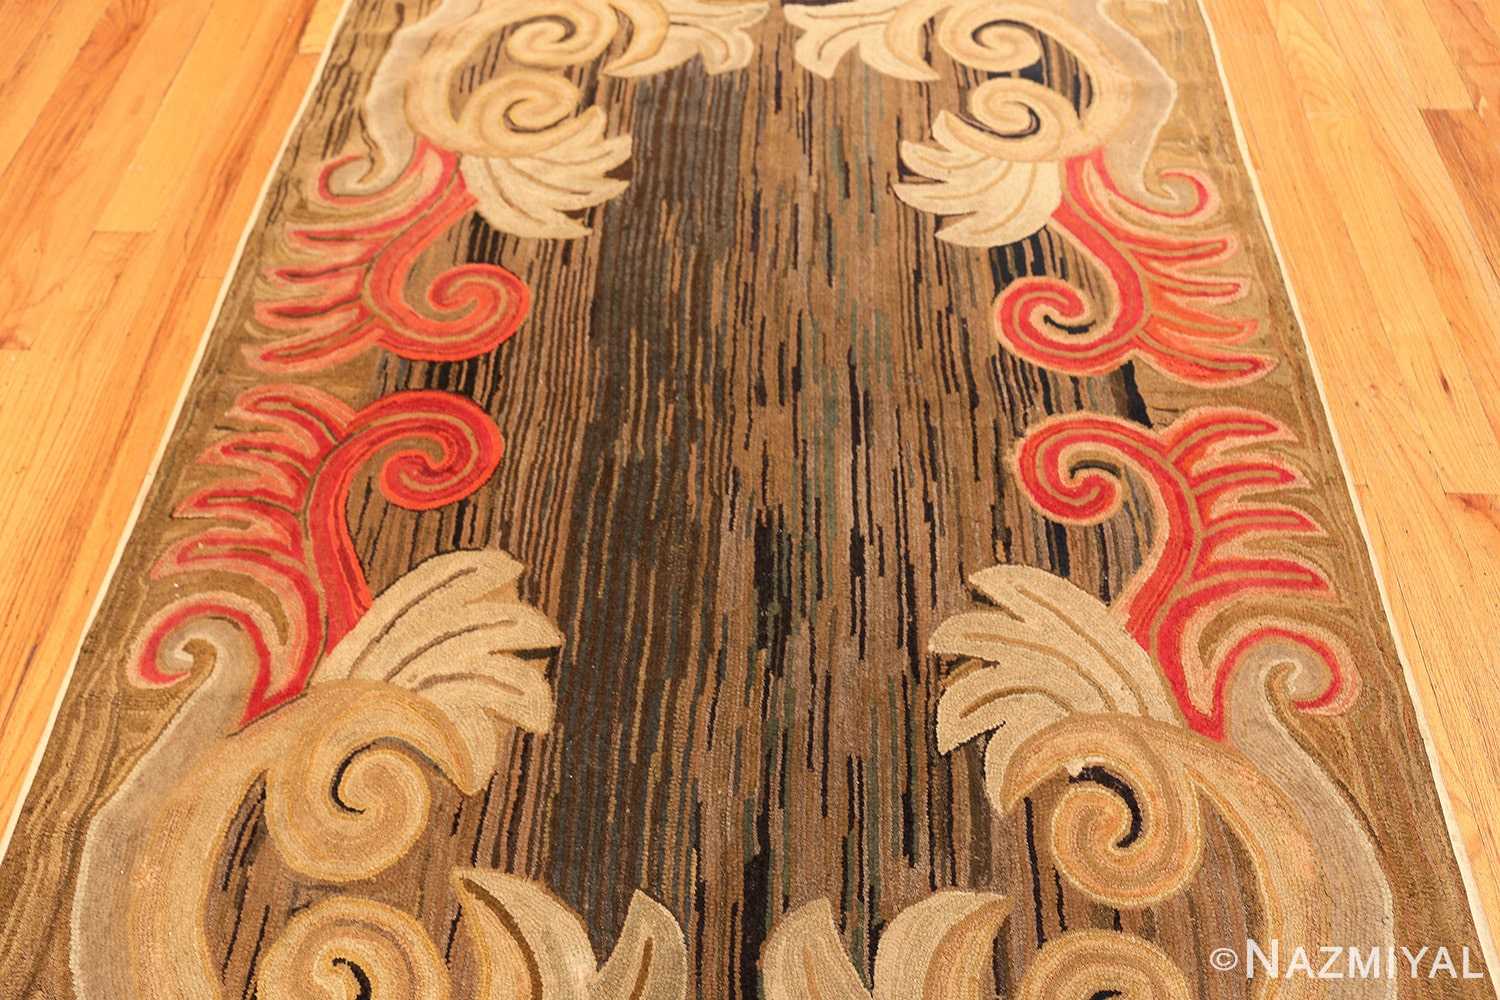 Field antique folk art American hooked rug 50560 by Nazmiyal